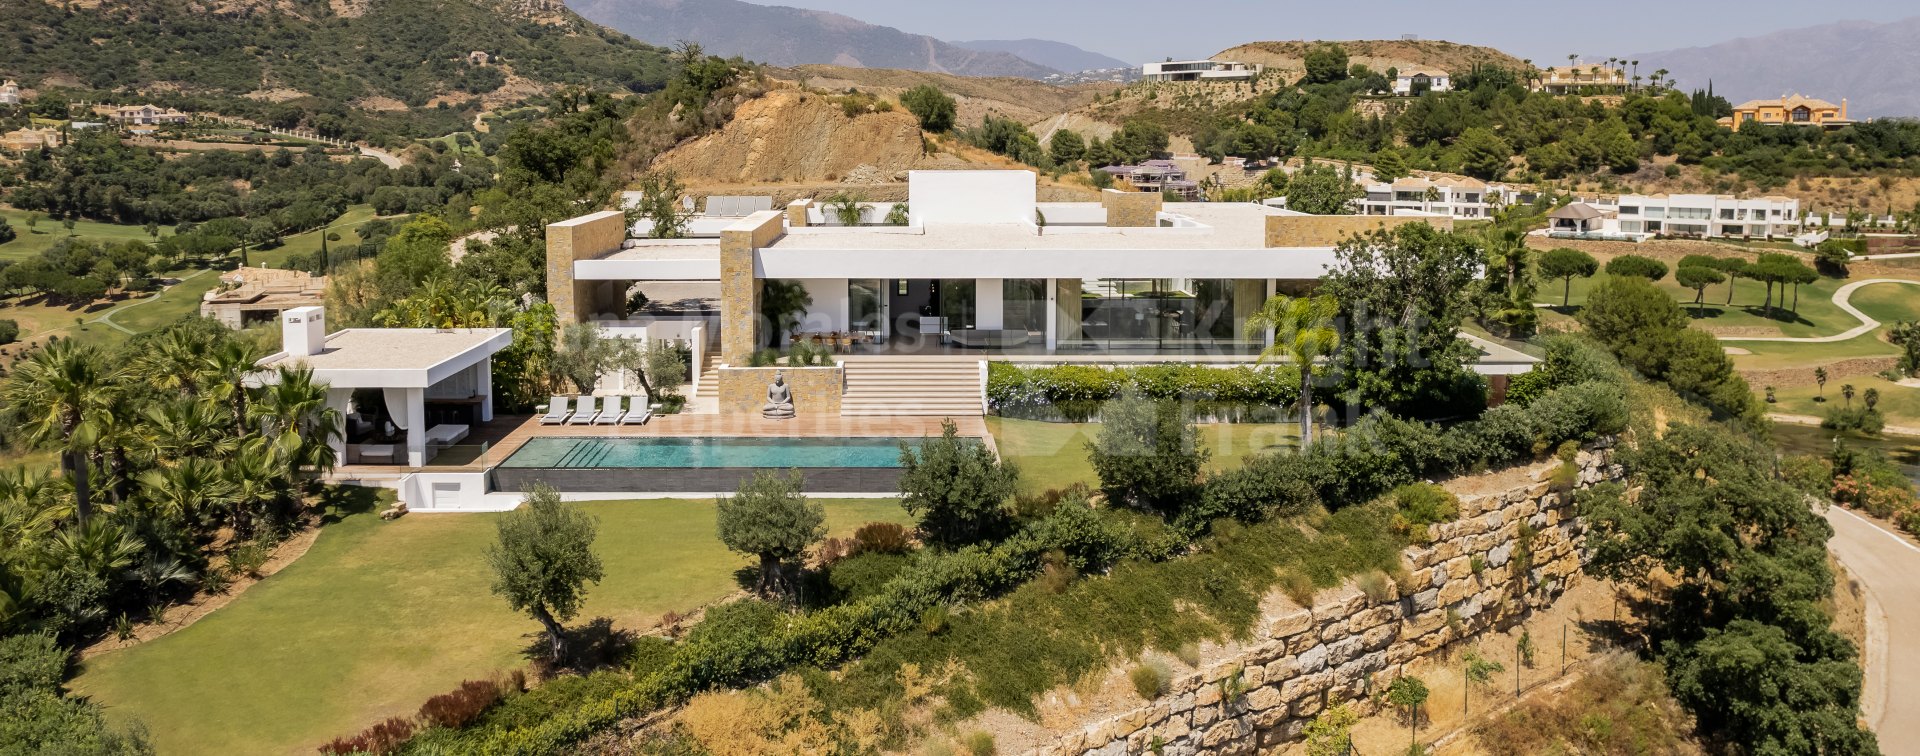 Marbella Club Golf Resort, Modern and functional villa for sale in prestigious address